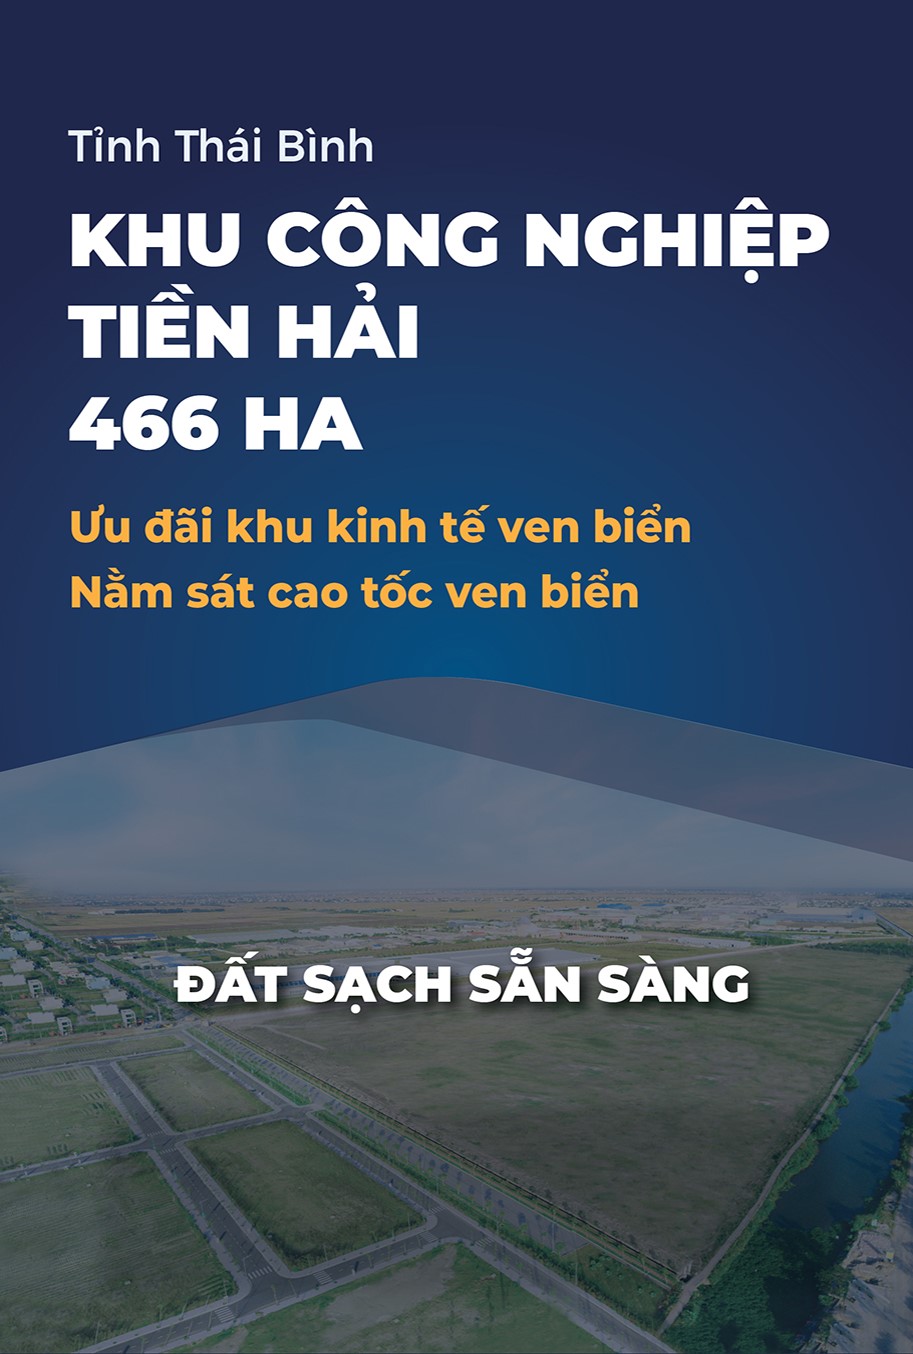 KCN Tiền Hải